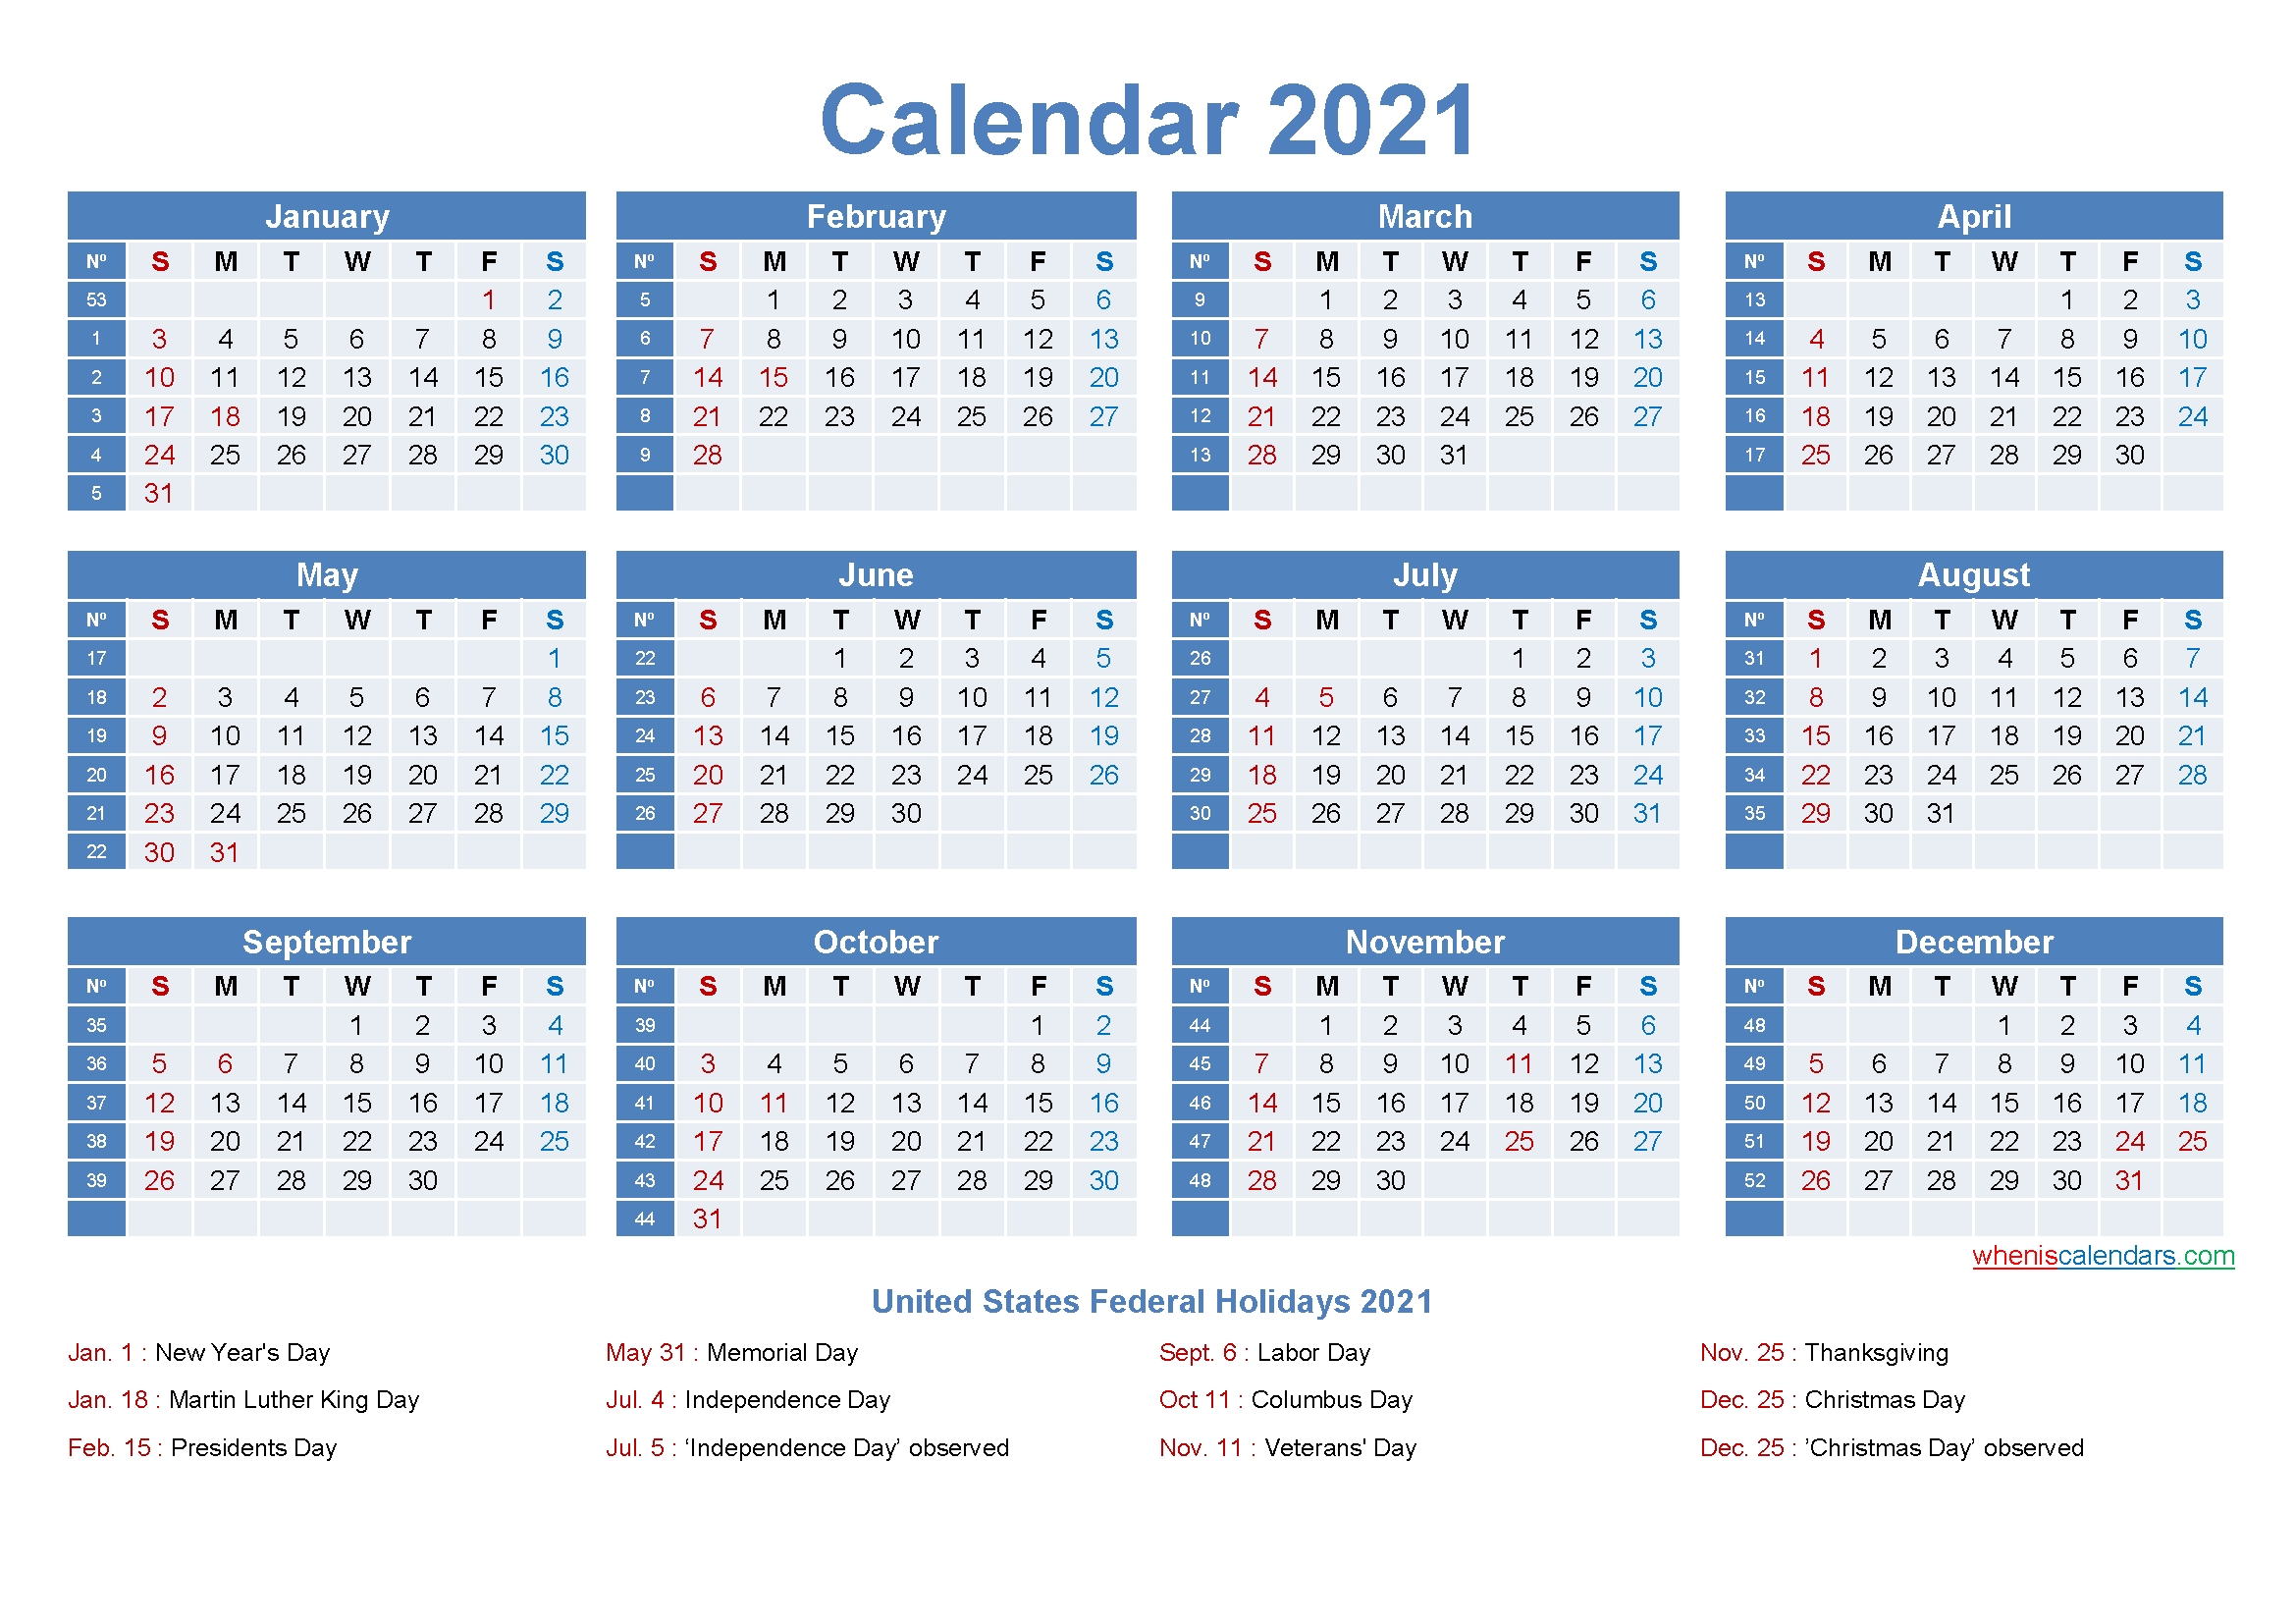 Large Desk Calendar 2021 With Holidays